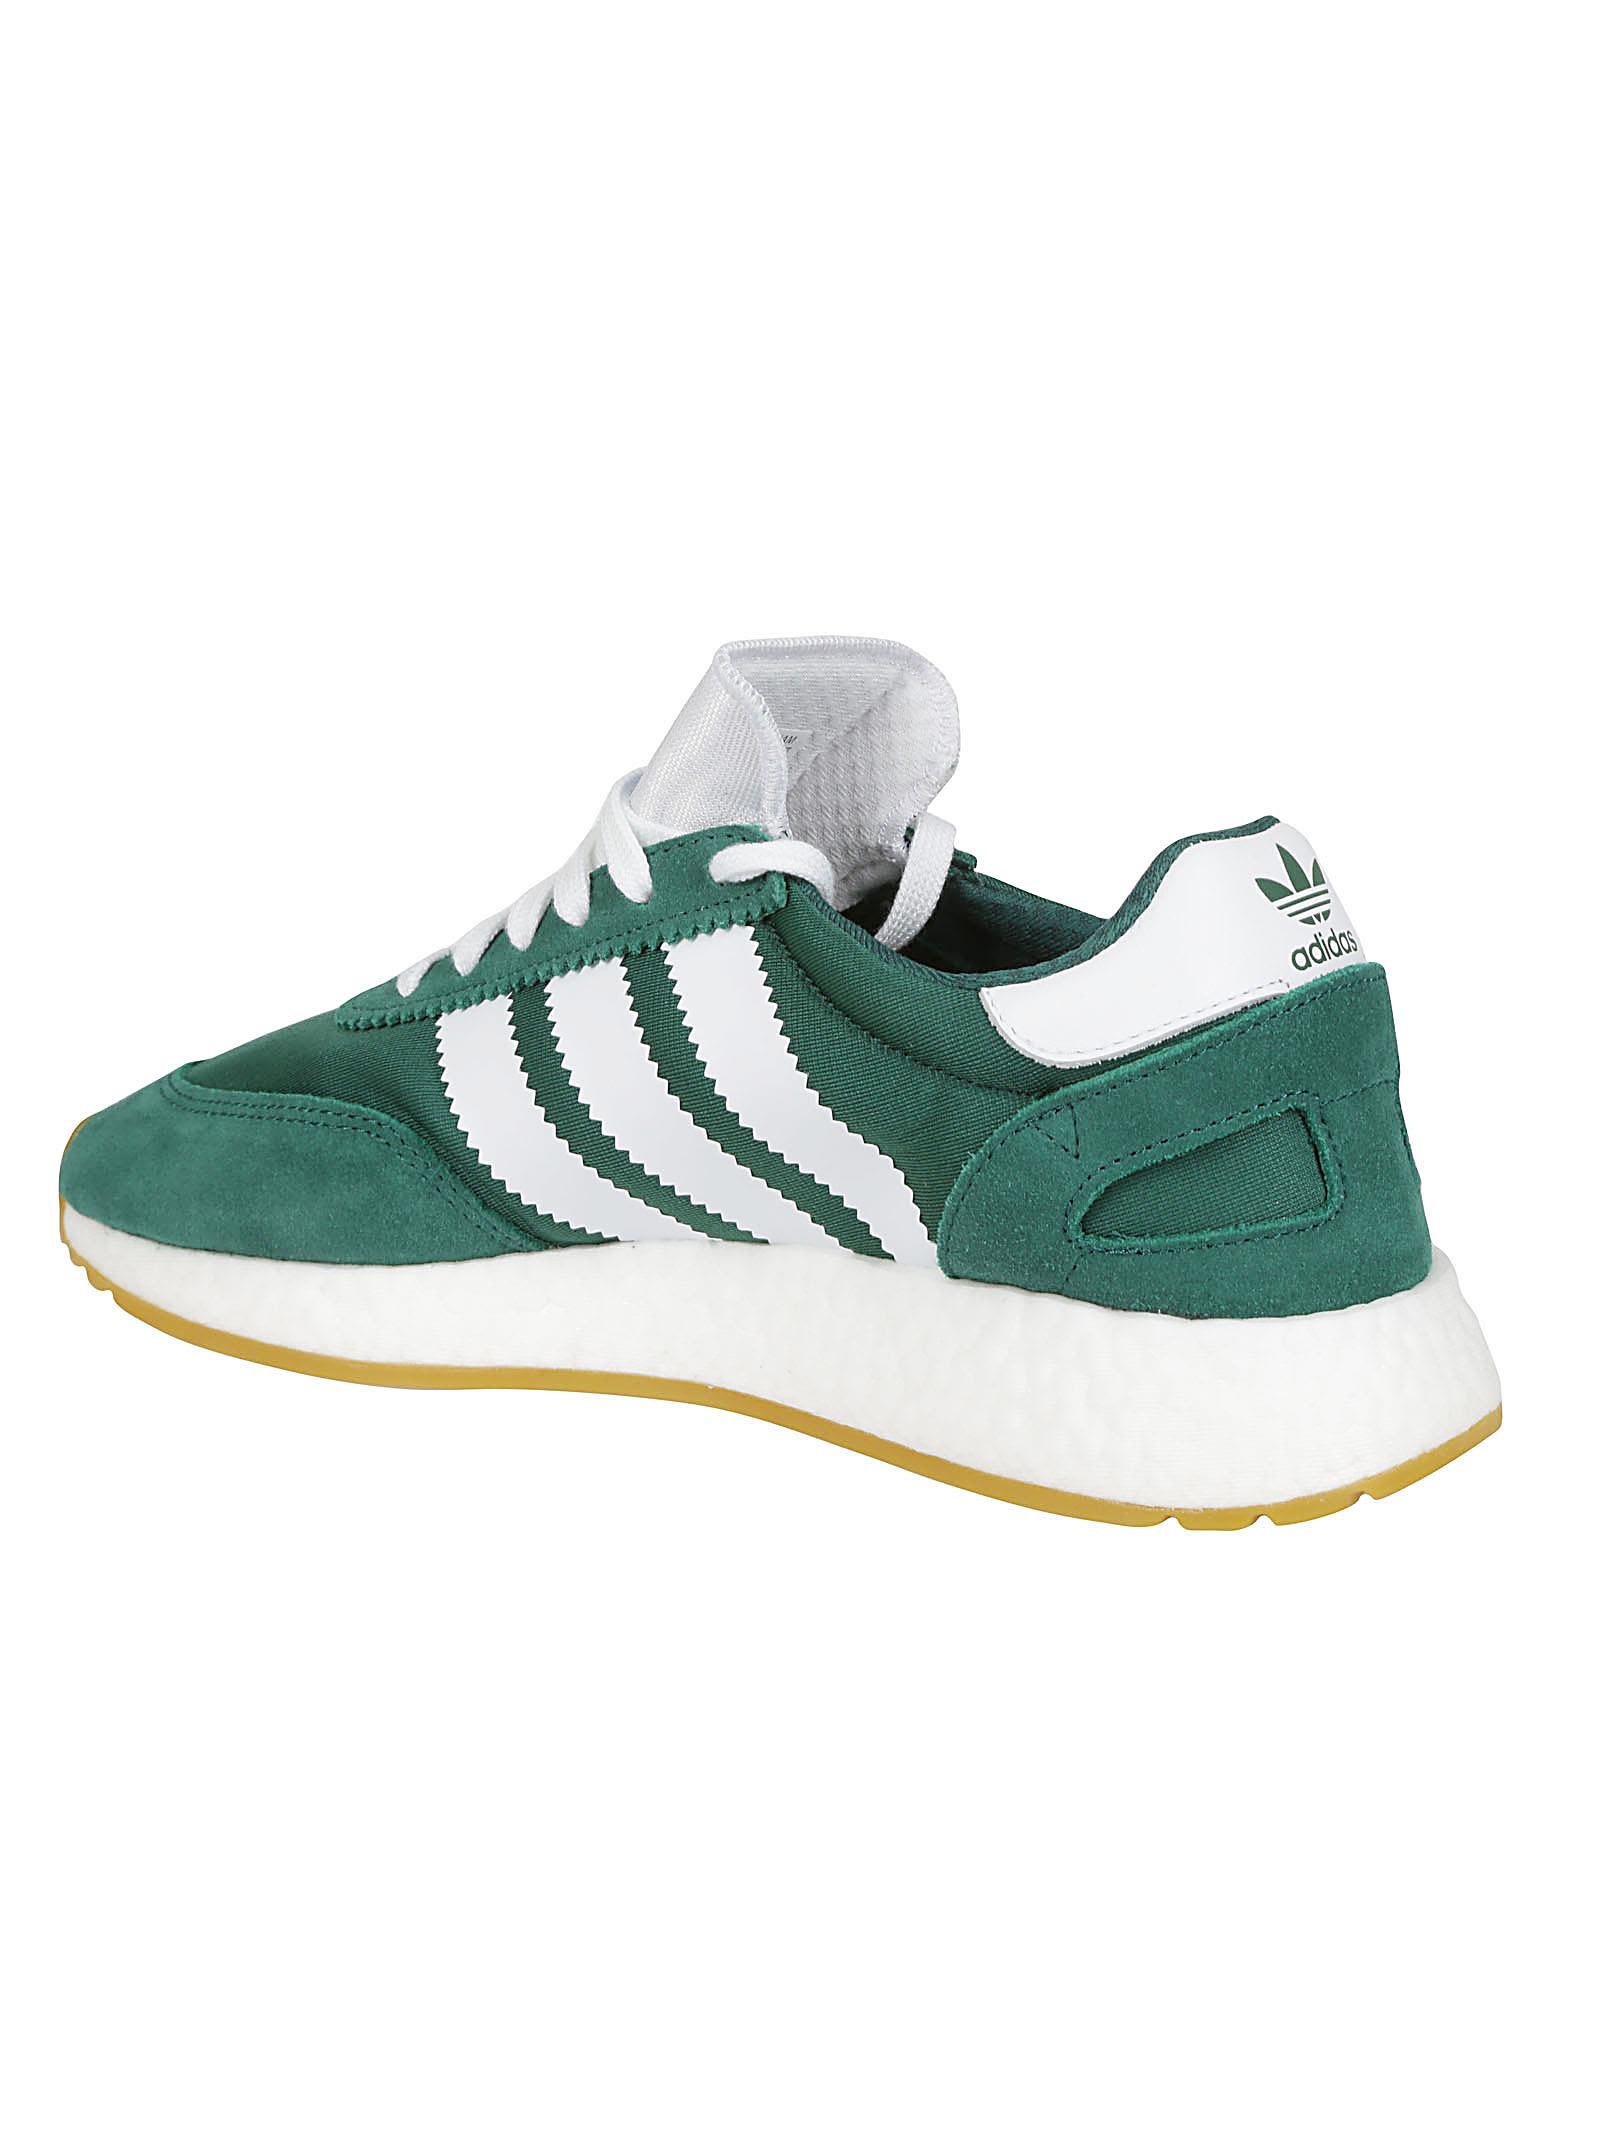 Adidas Originals Adidas Originals I-5923 Sneakers - Green - 10815653 ...